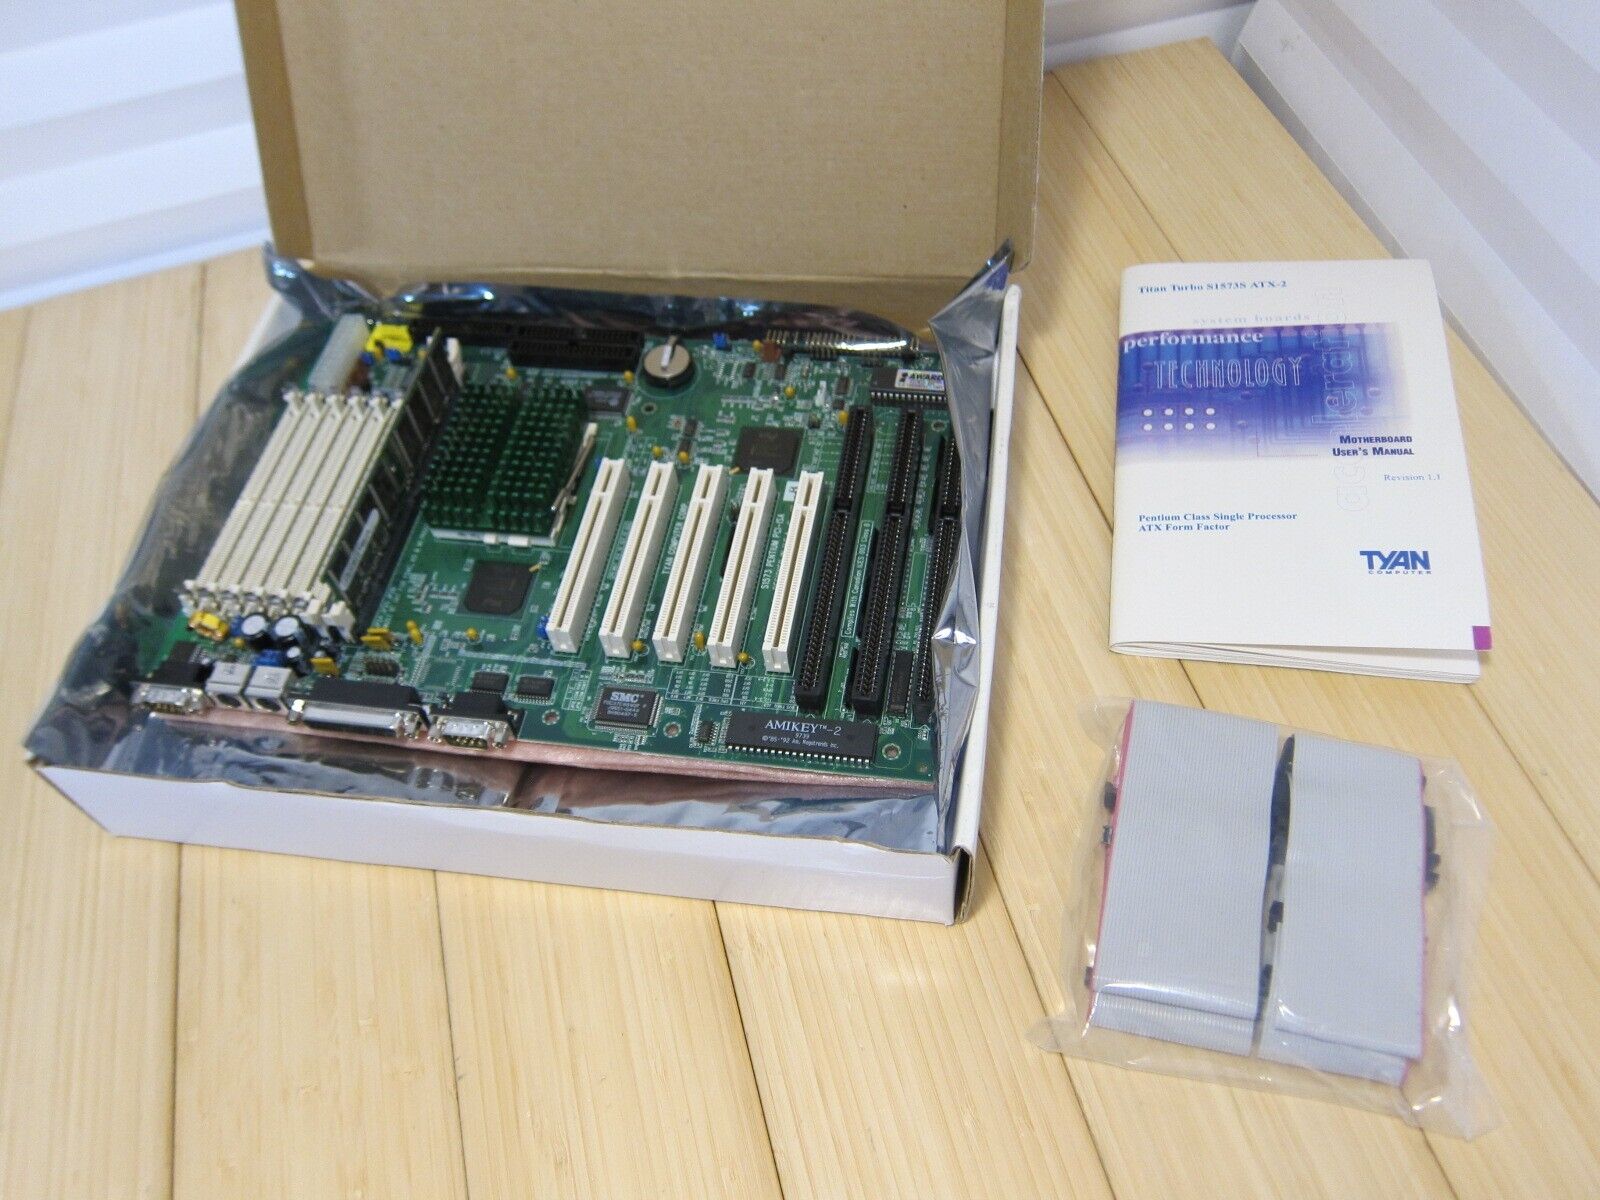 Tyan S1573S Motherboard (Titan Turbo ATX-2) PCI & ISA With 90MHz CPU & 128MB RAM